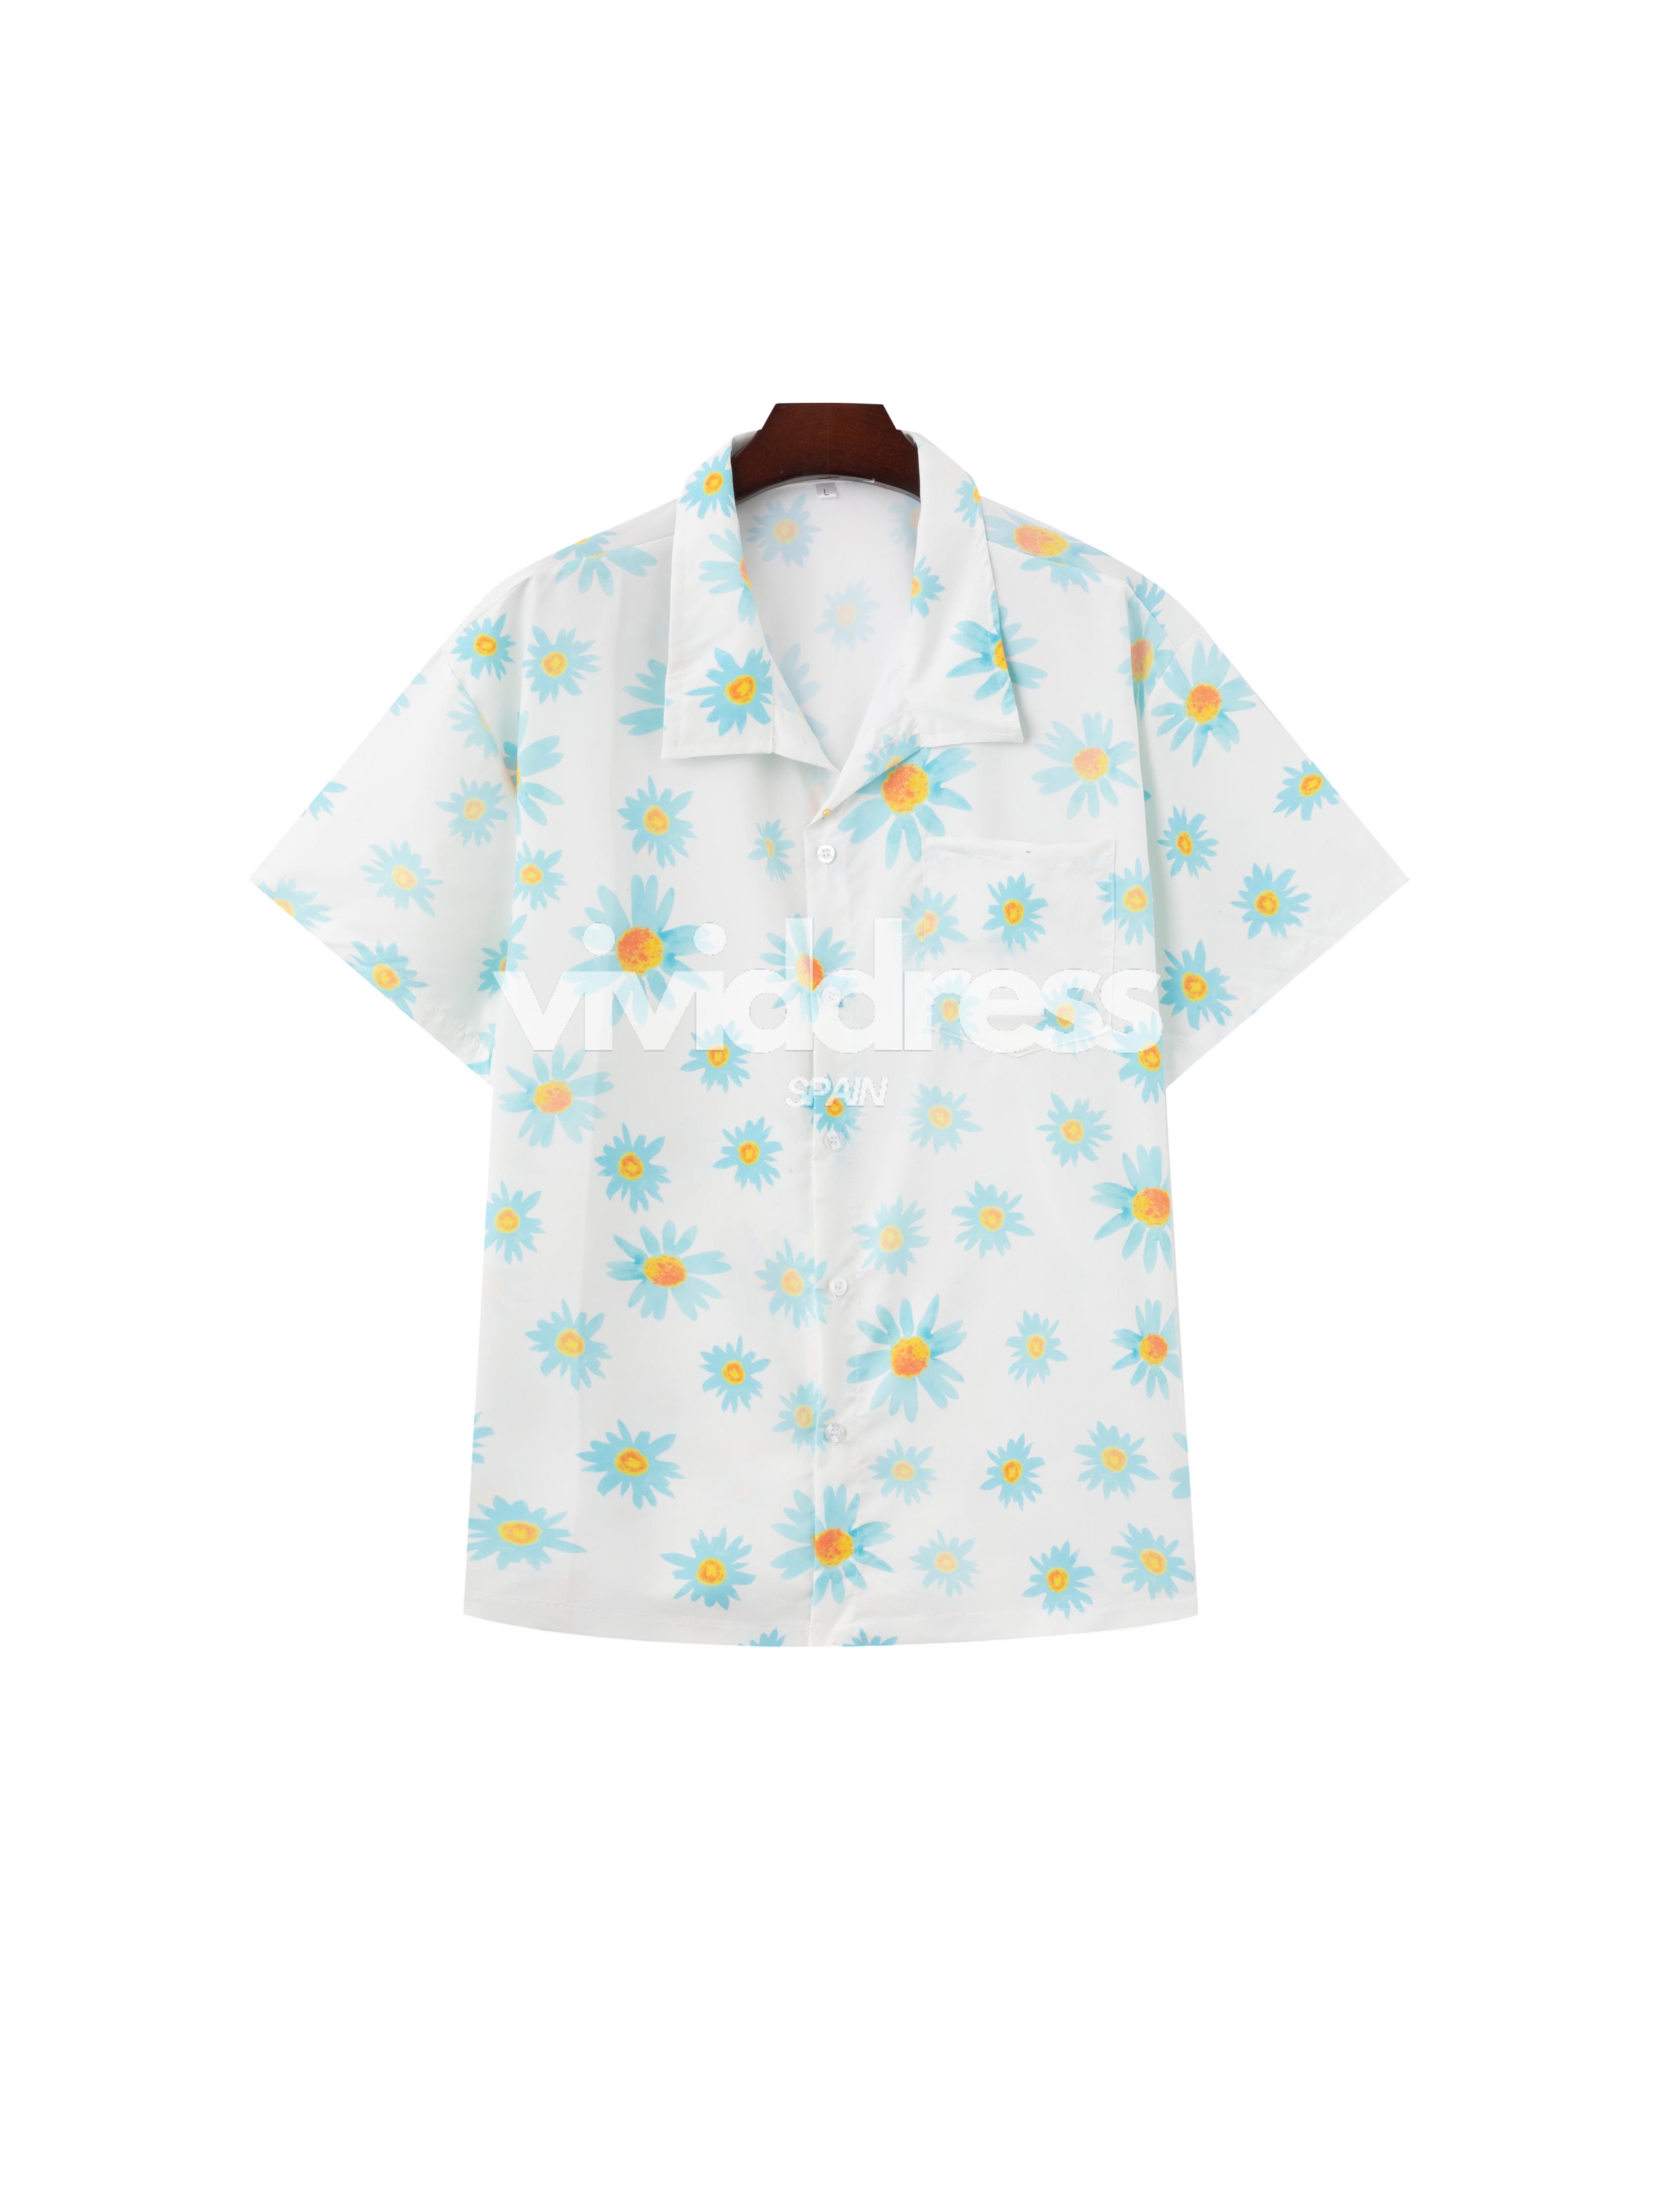 Men's Floral Print White Summer Holiday Short Sleeve Shirt